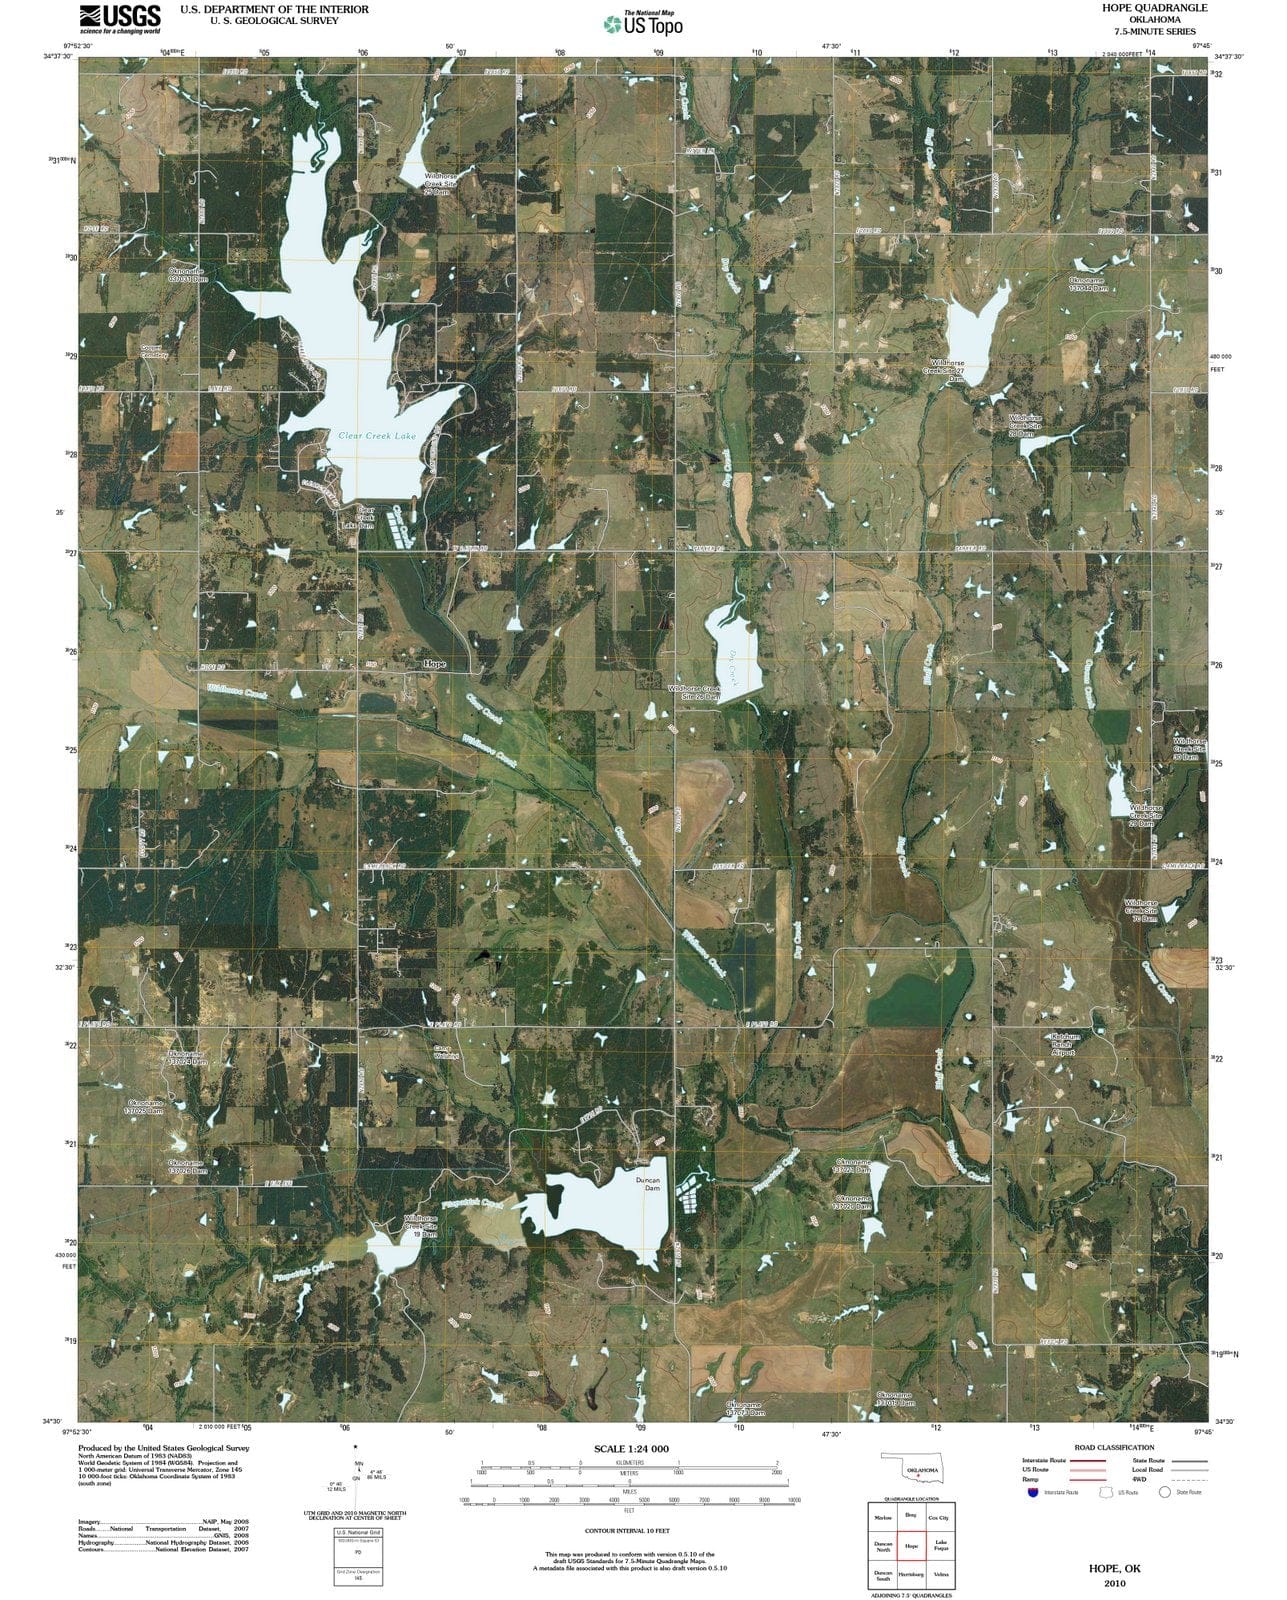 2010 Hope, OK - Oklahoma - USGS Topographic Map